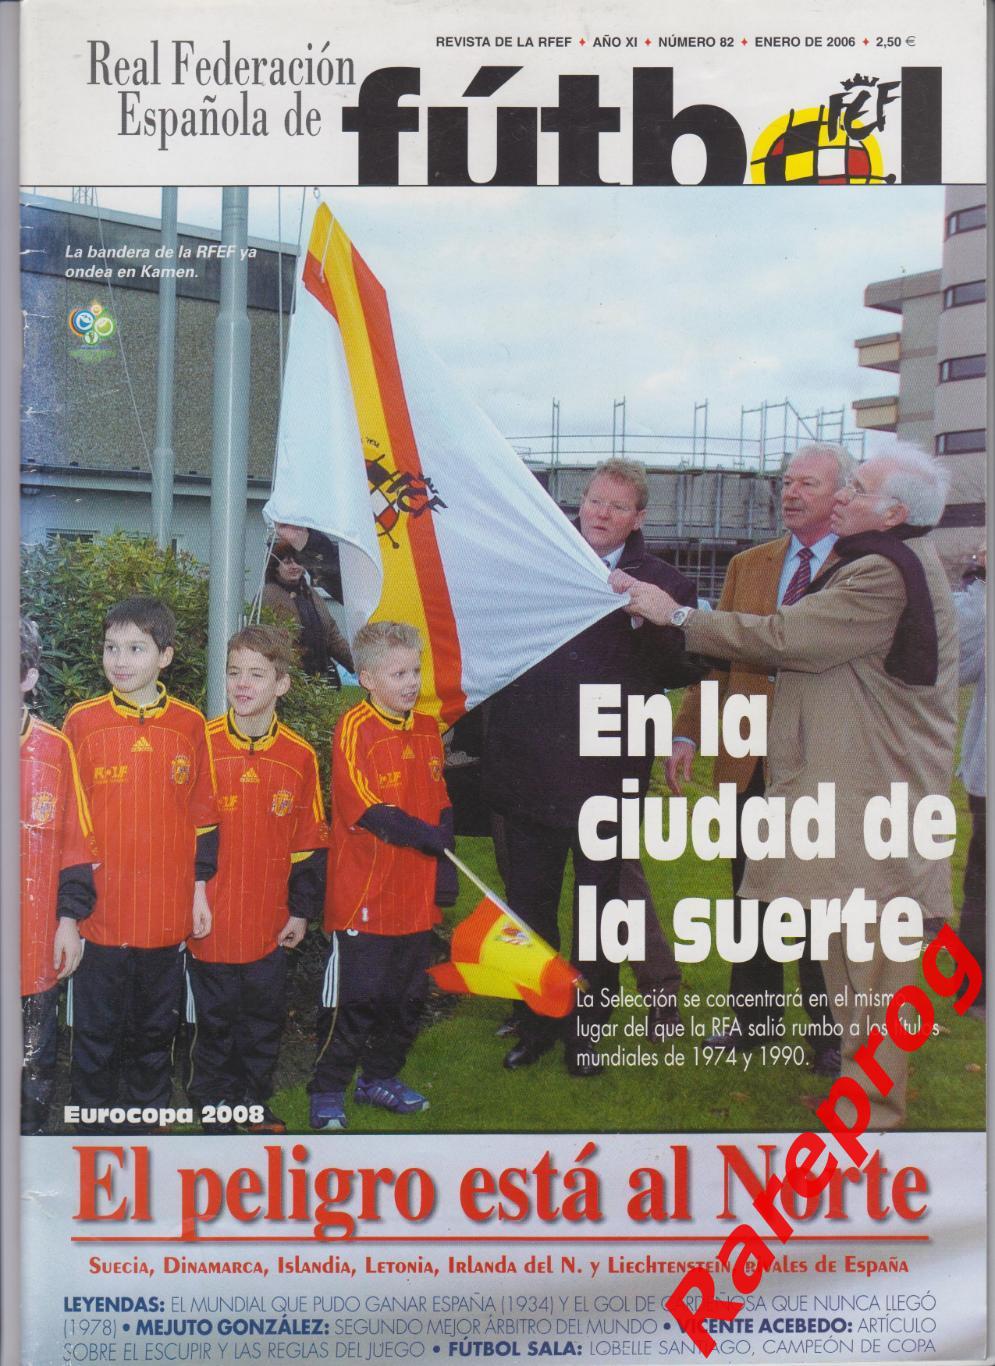 журнал Футбол RFEF Испания № 82 январь 2006 - ЕВРО 2008 Латвия представление